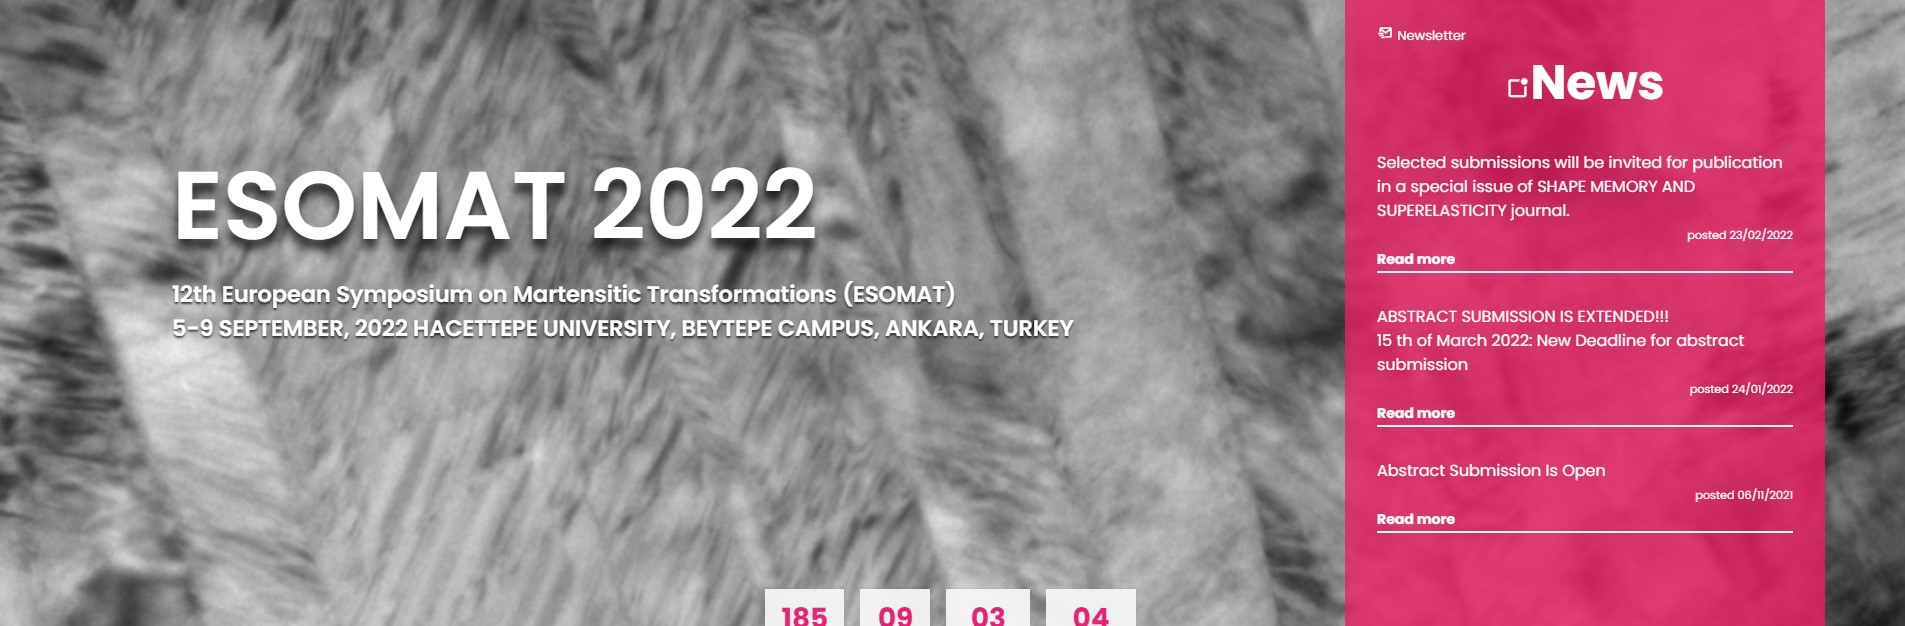 12. European Symposium on Martensitic Transformations ESOMAT 2022